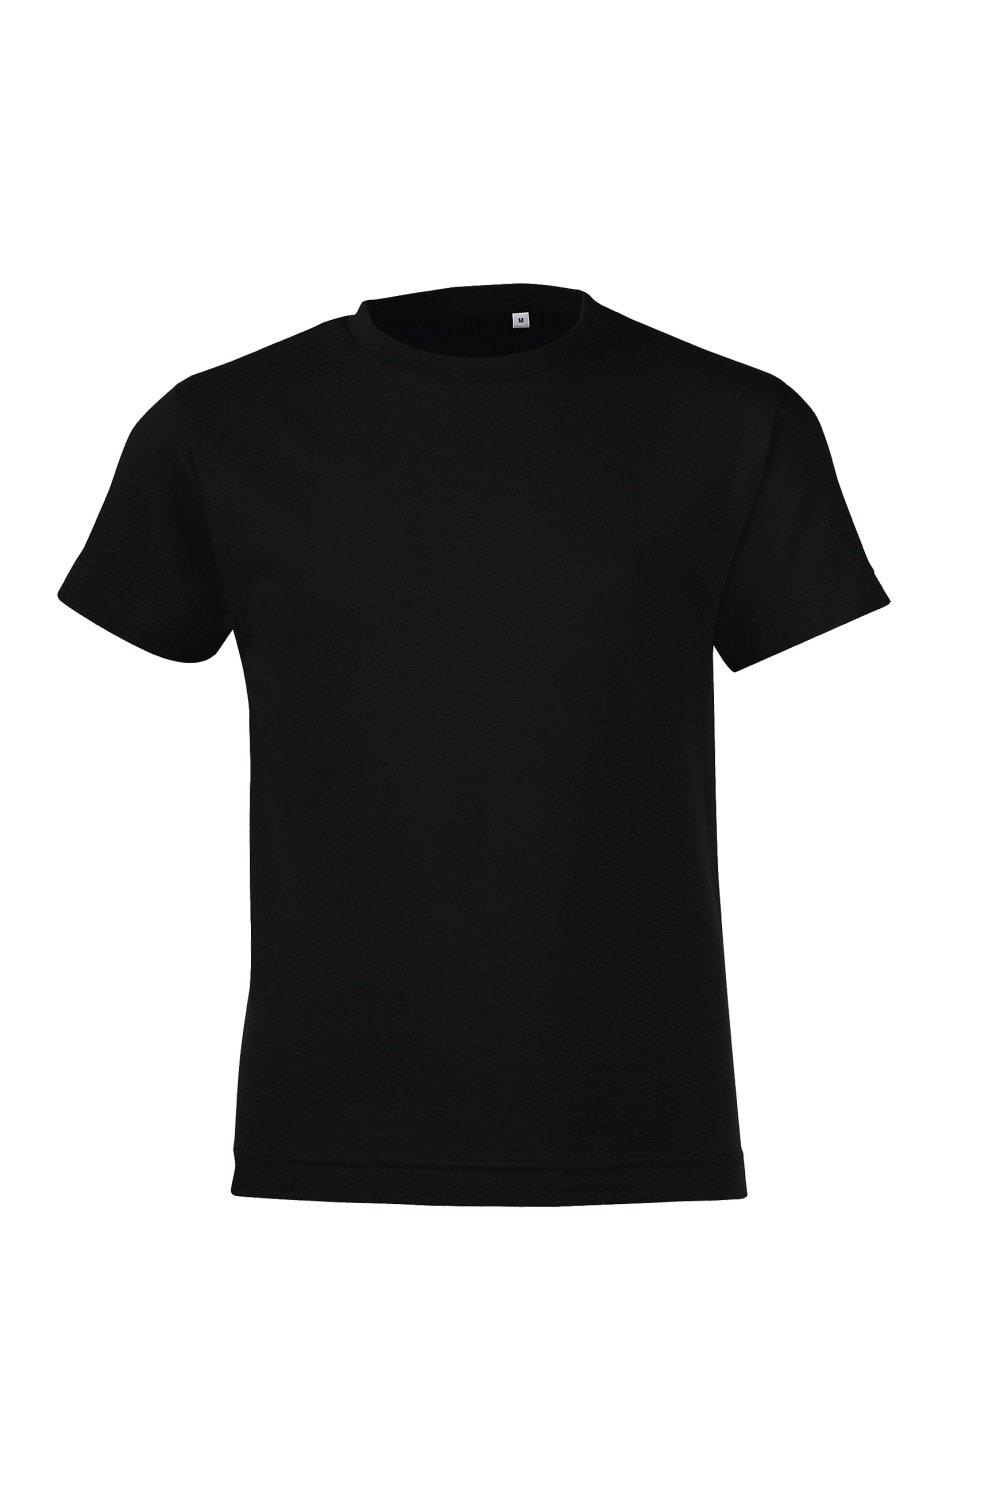 Regent Short Sleeve Fitted T-Shirt